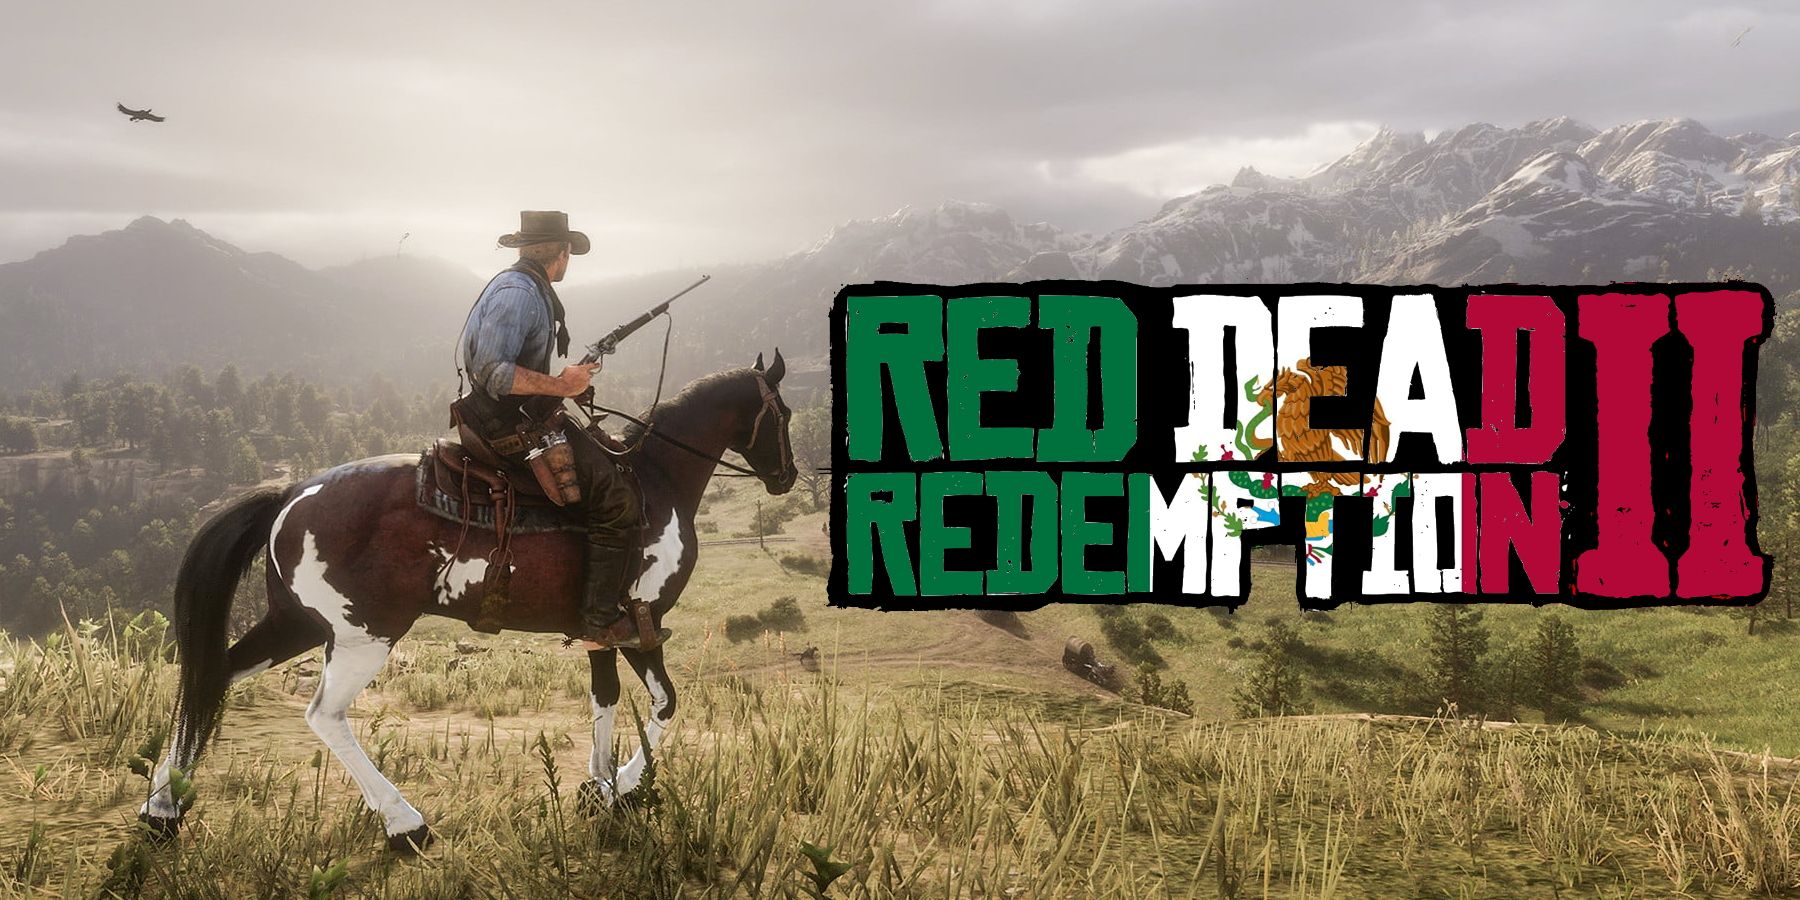 red dead redemption 2 mods